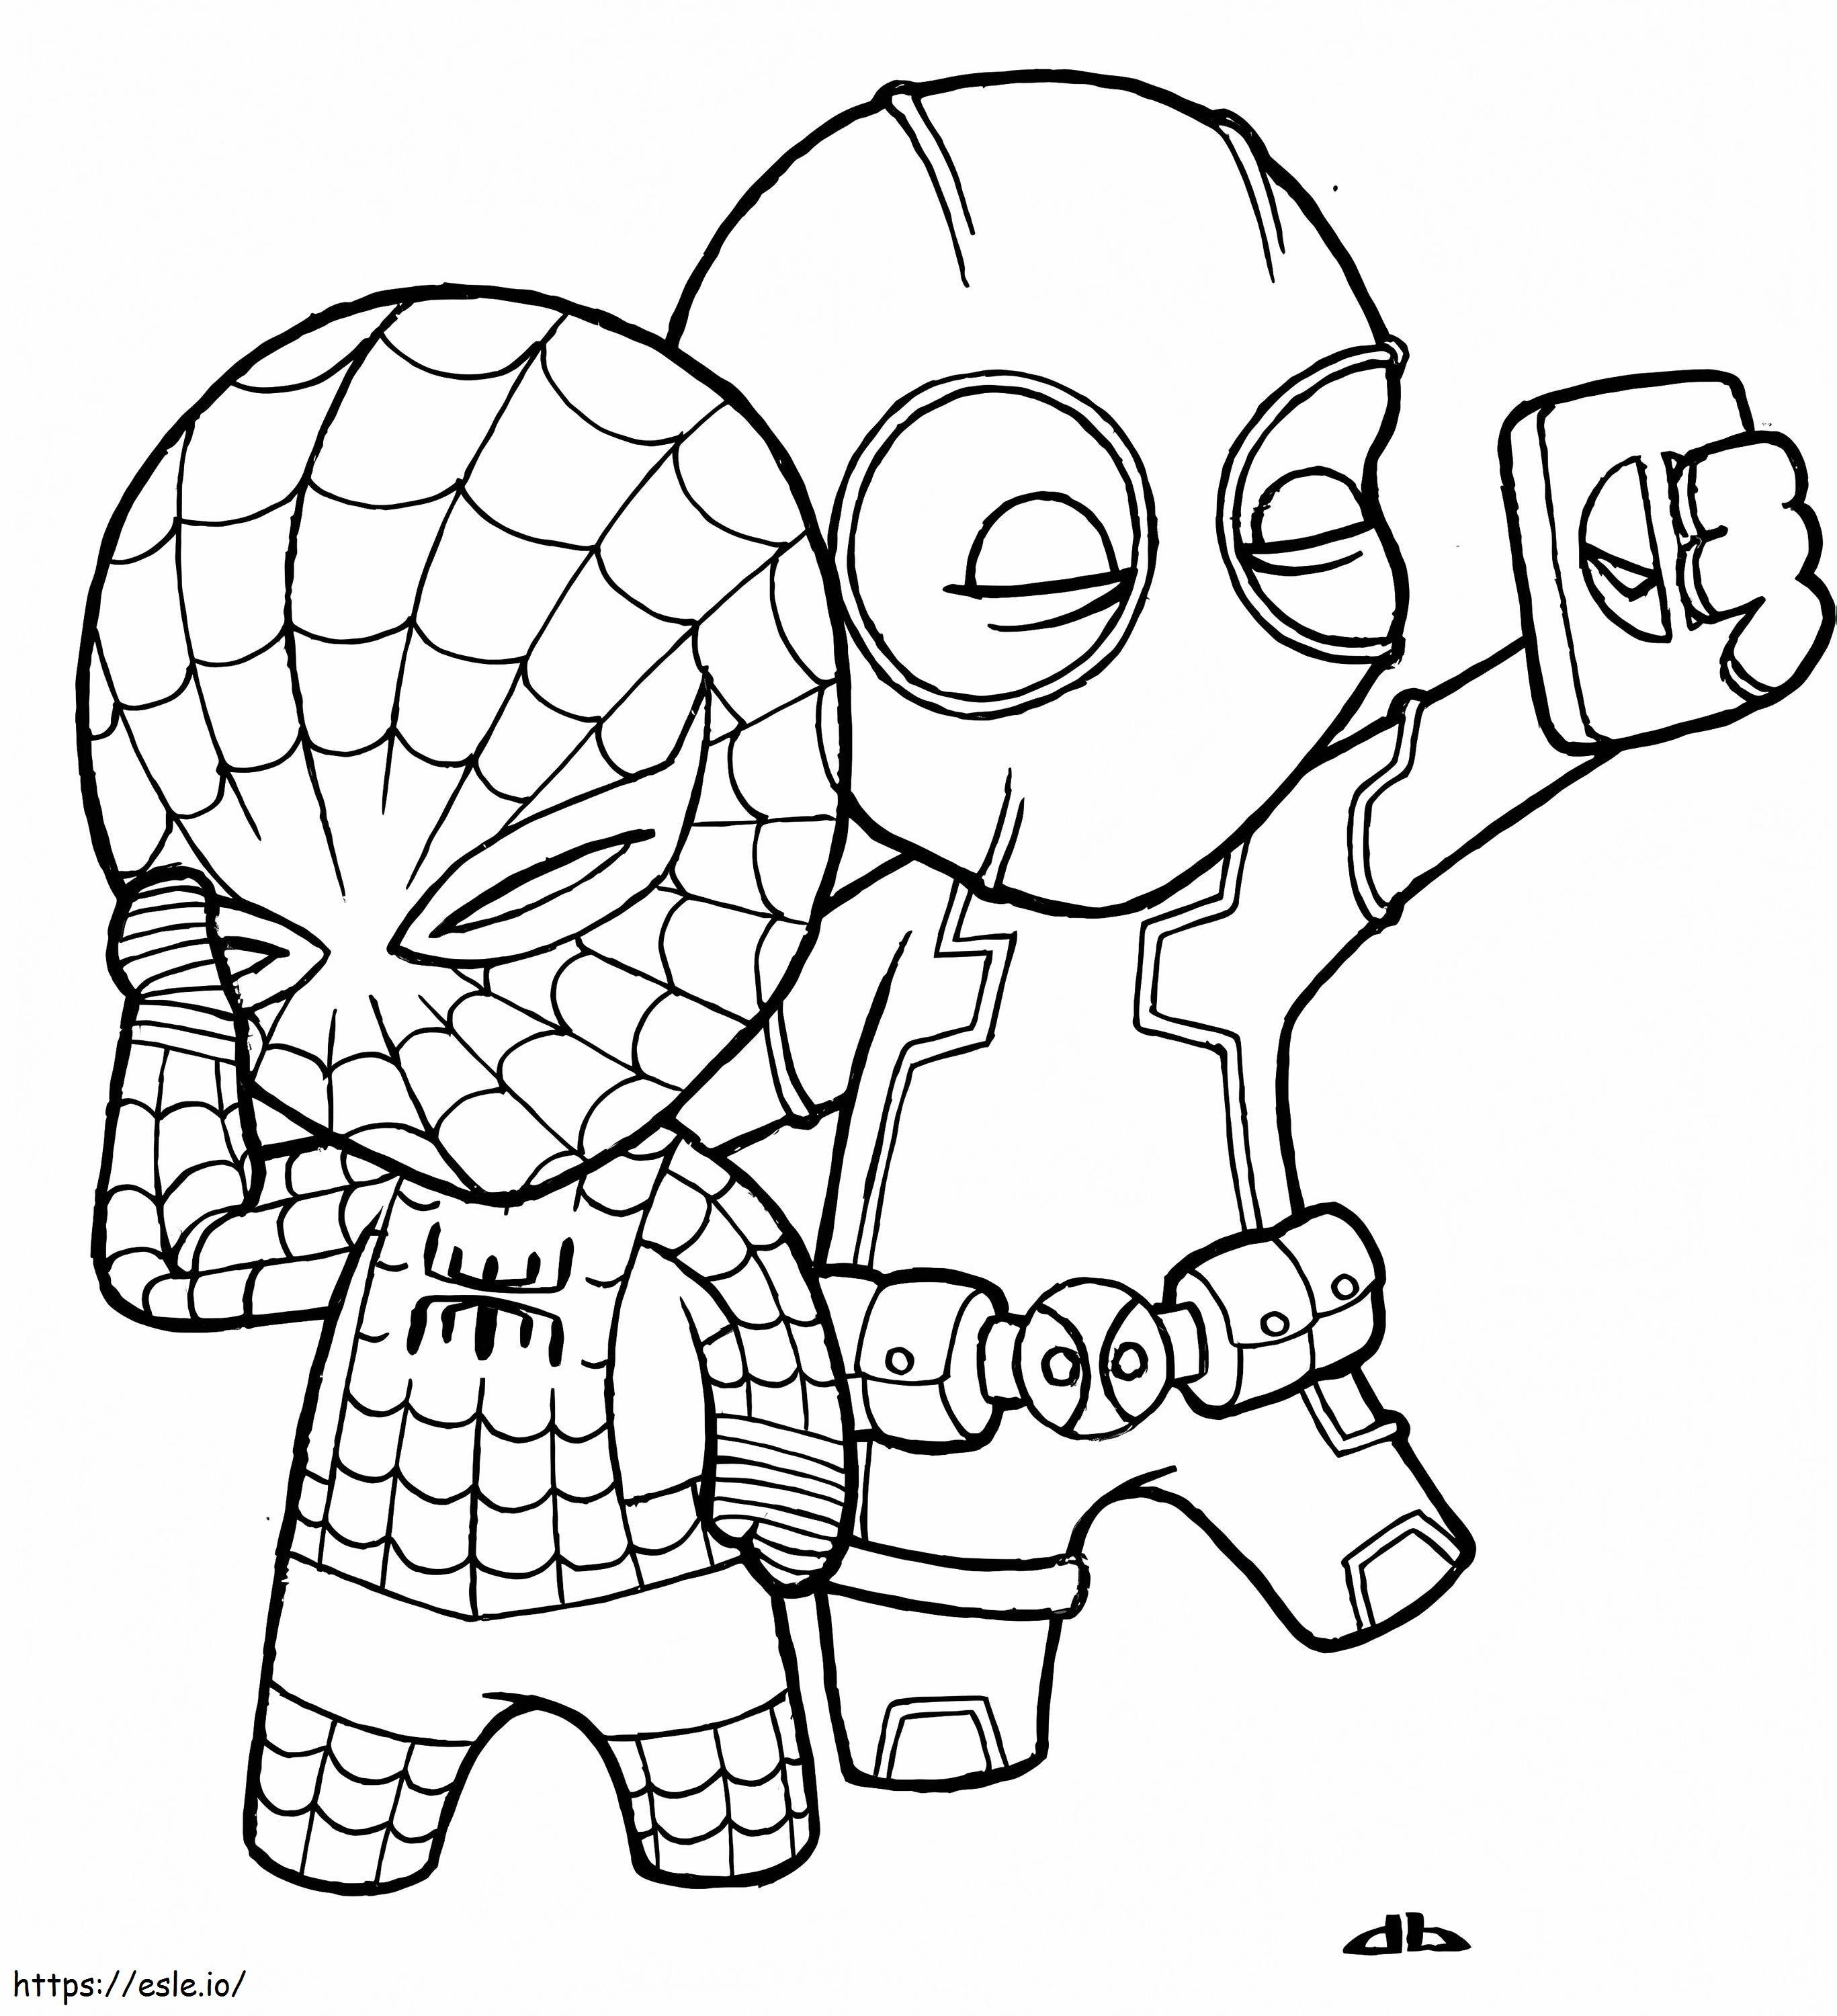 Selfie Con Spider i Deadpool kolorowanka